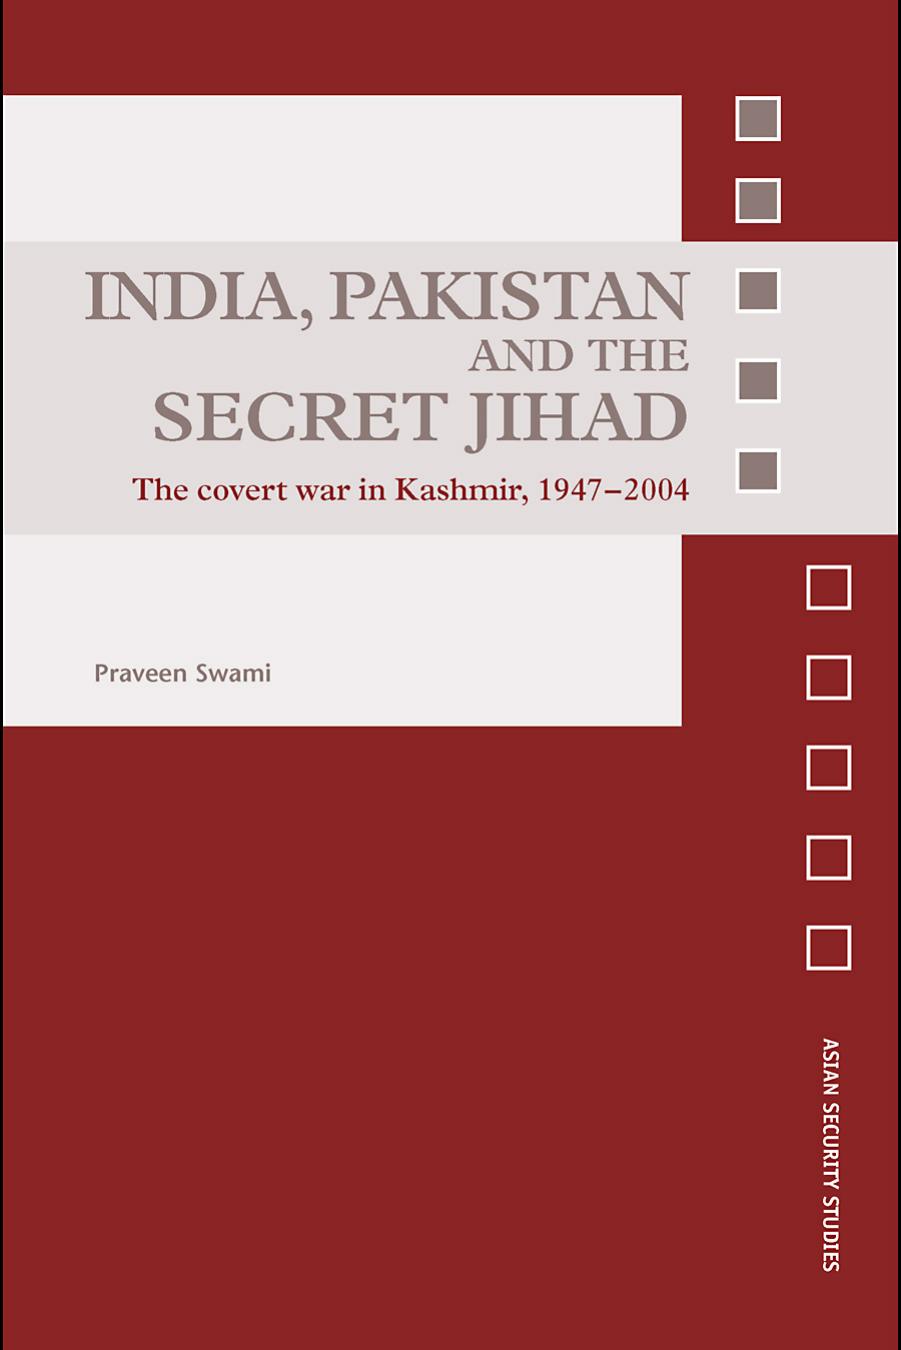 India, Pakistan and the Secret Jihad: The Covert War in Kashmir, 1947-2004